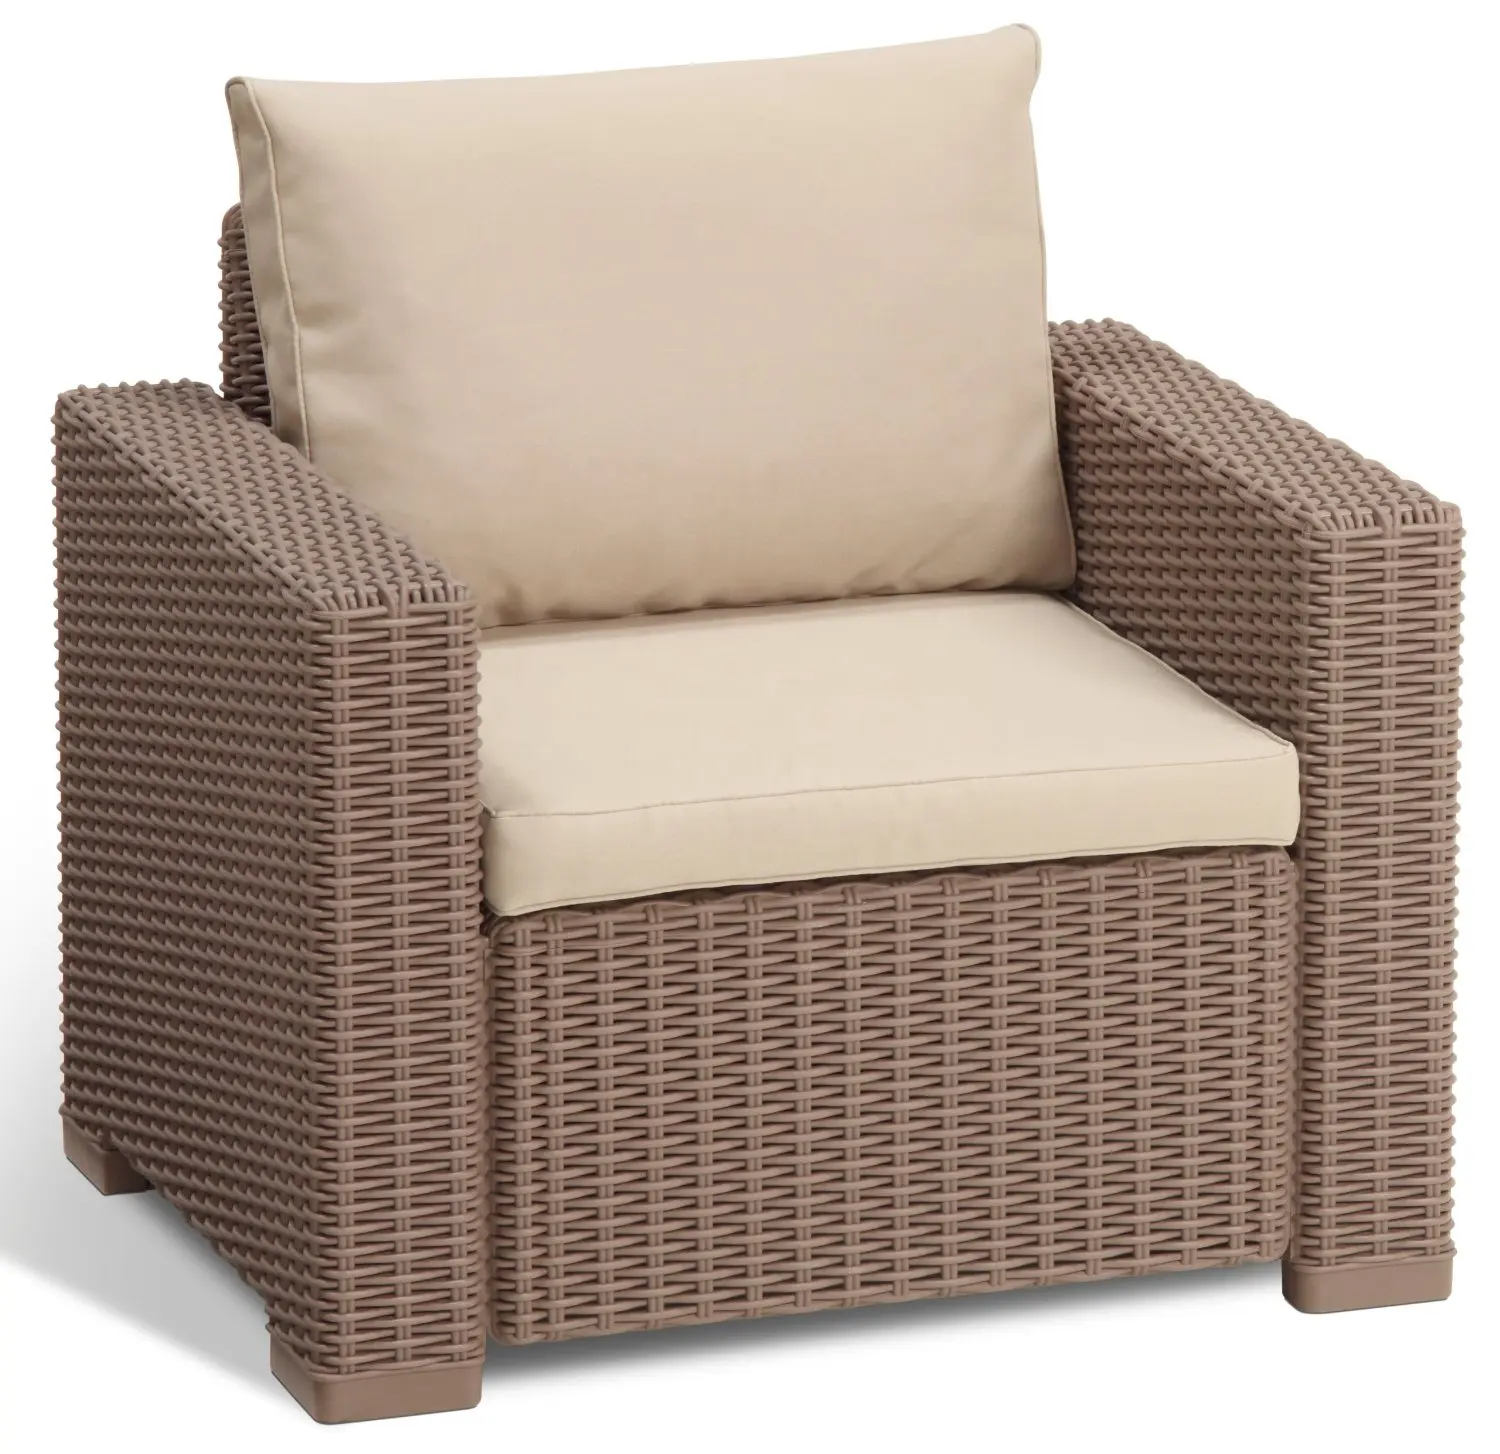 PP Rattan Pattan Single Sofa Outdoor Wicker Modular Single Sofa Furniture Garden Set Modern With Cushion Outdoor